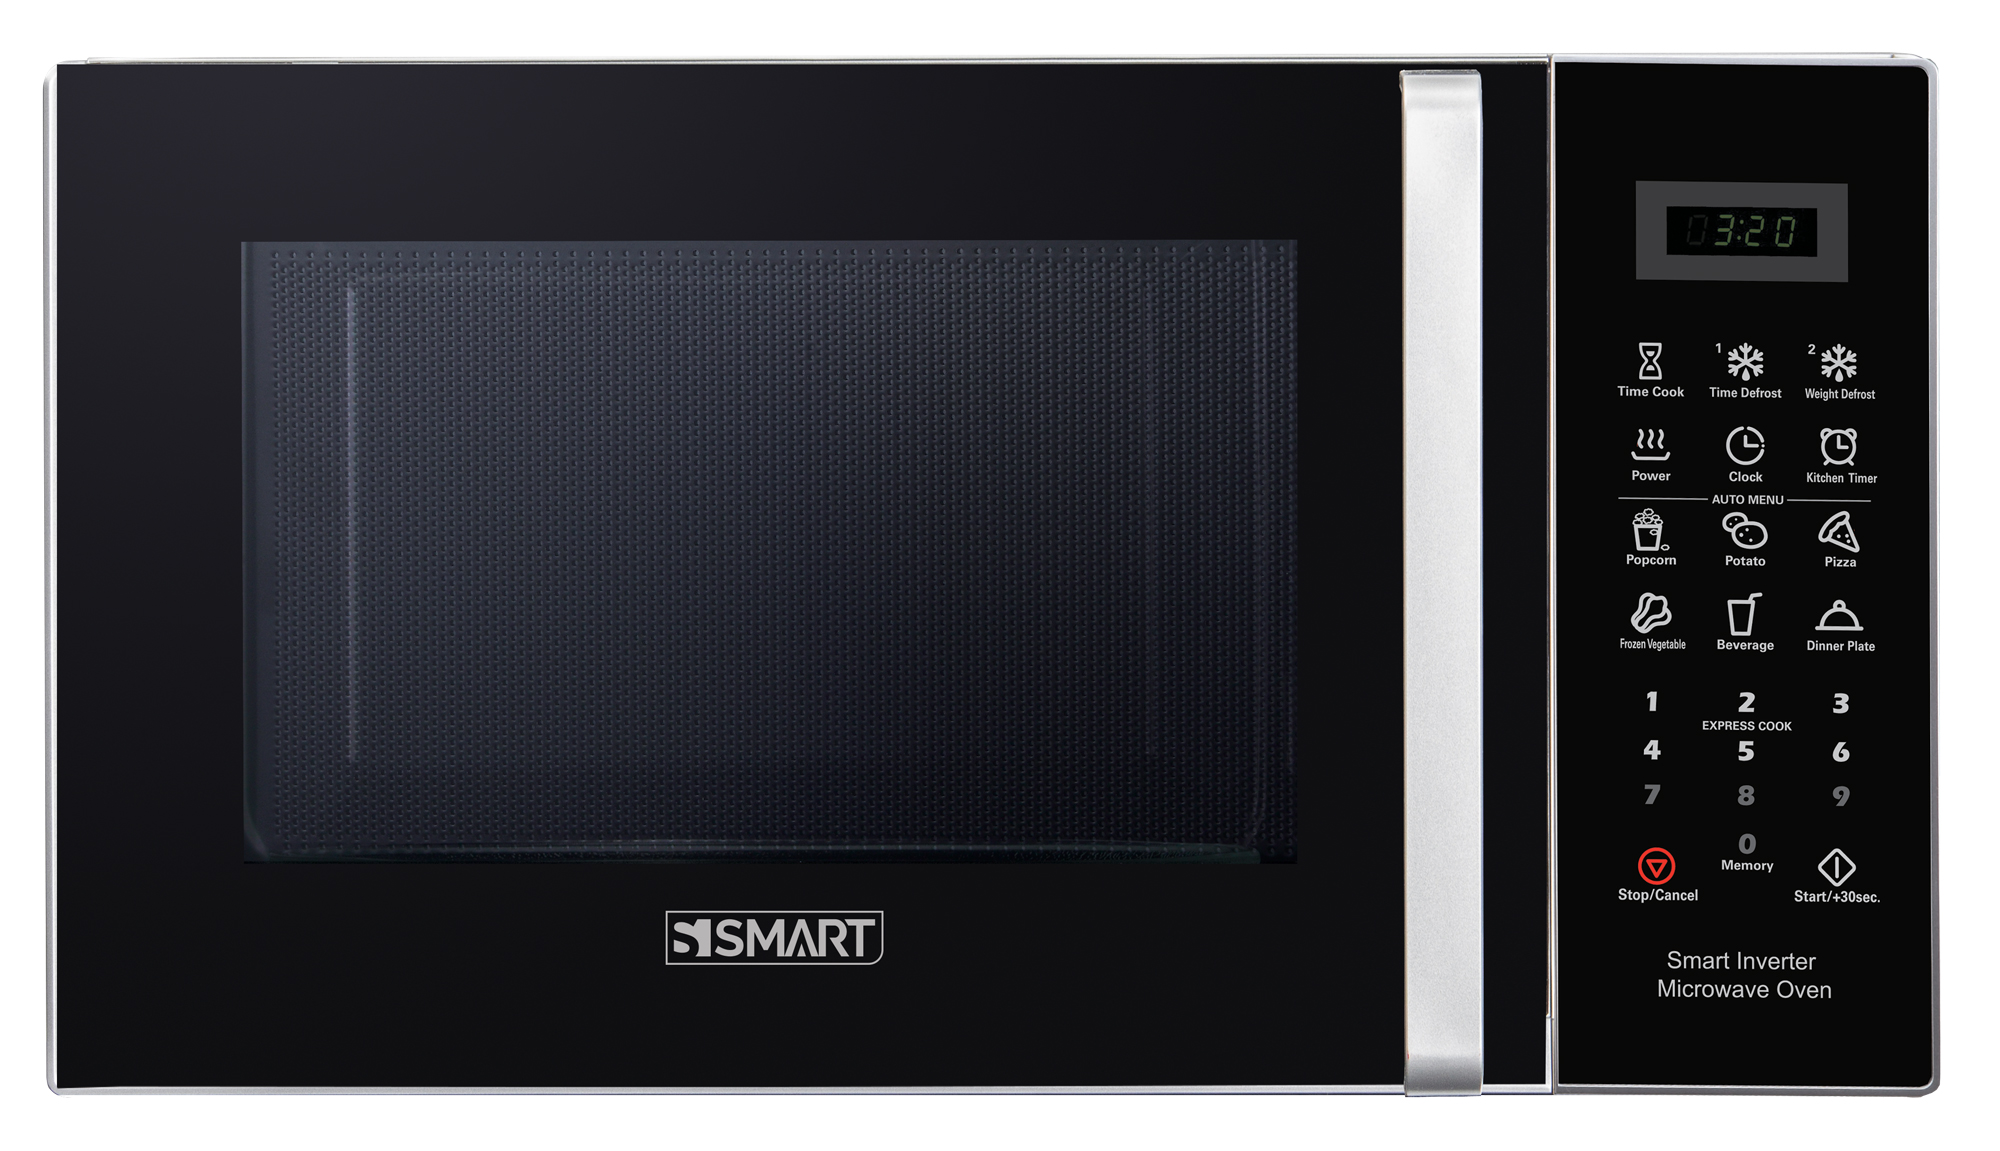 Smart Inverter Microwave, 25 Liters, 800 Watt, Silver and Black - SMW253AXX